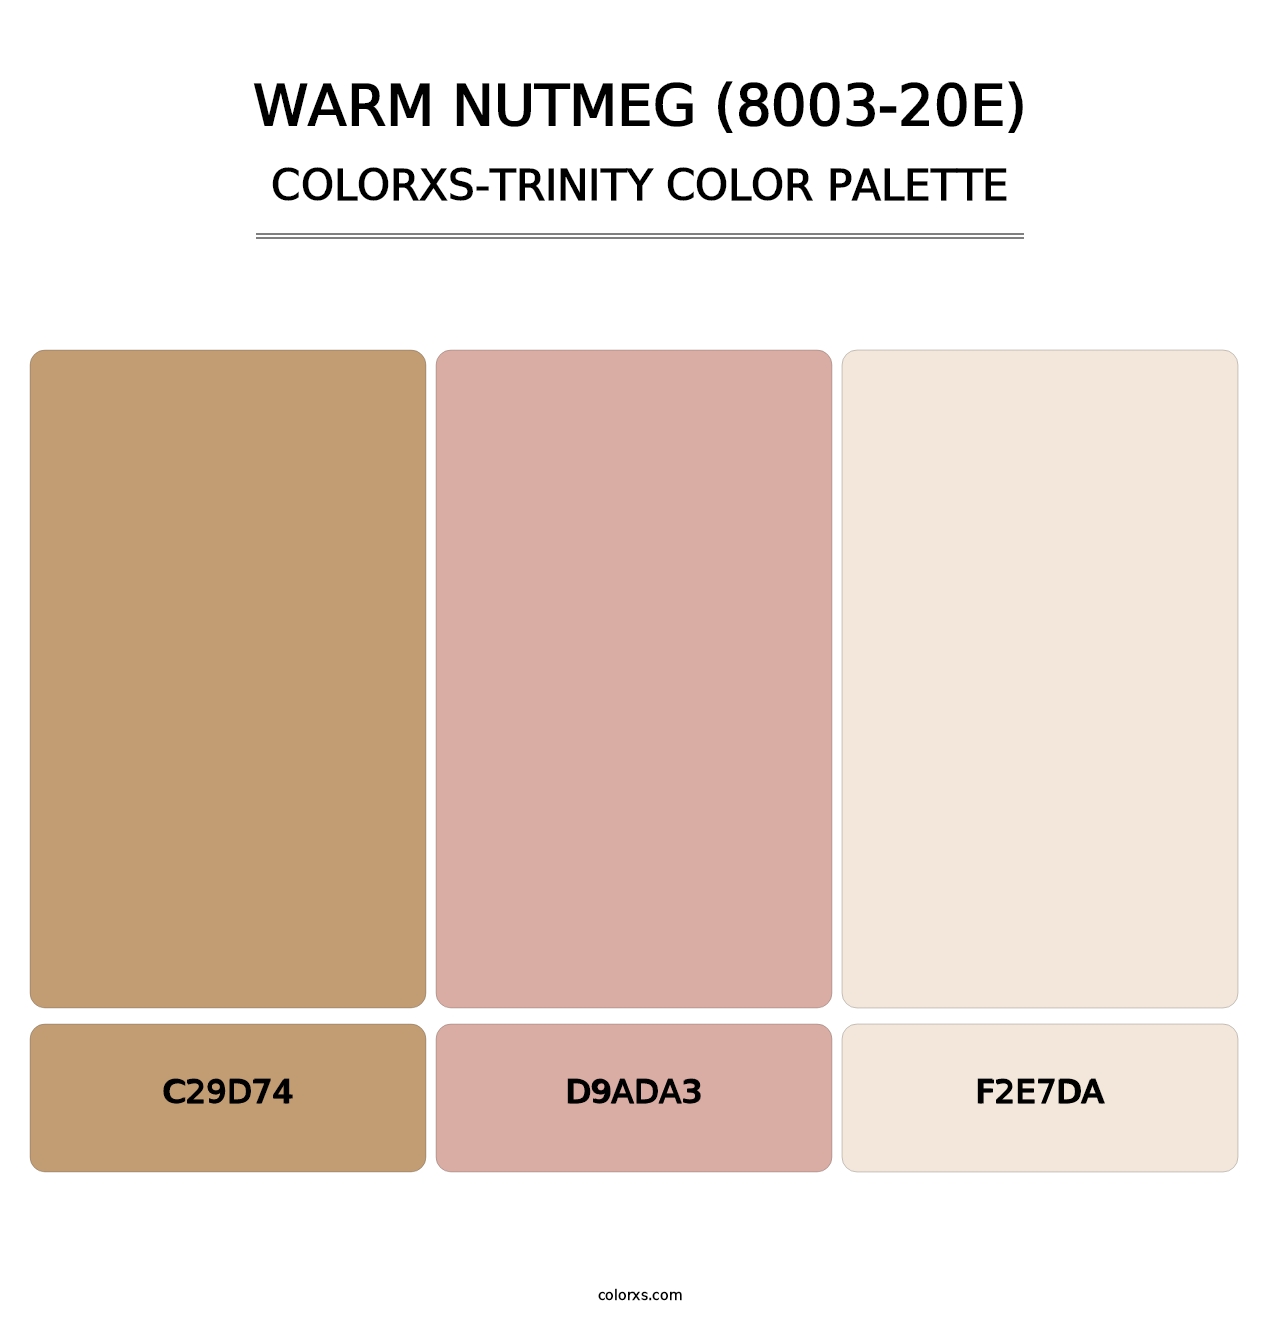 Warm Nutmeg (8003-20E) - Colorxs Trinity Palette